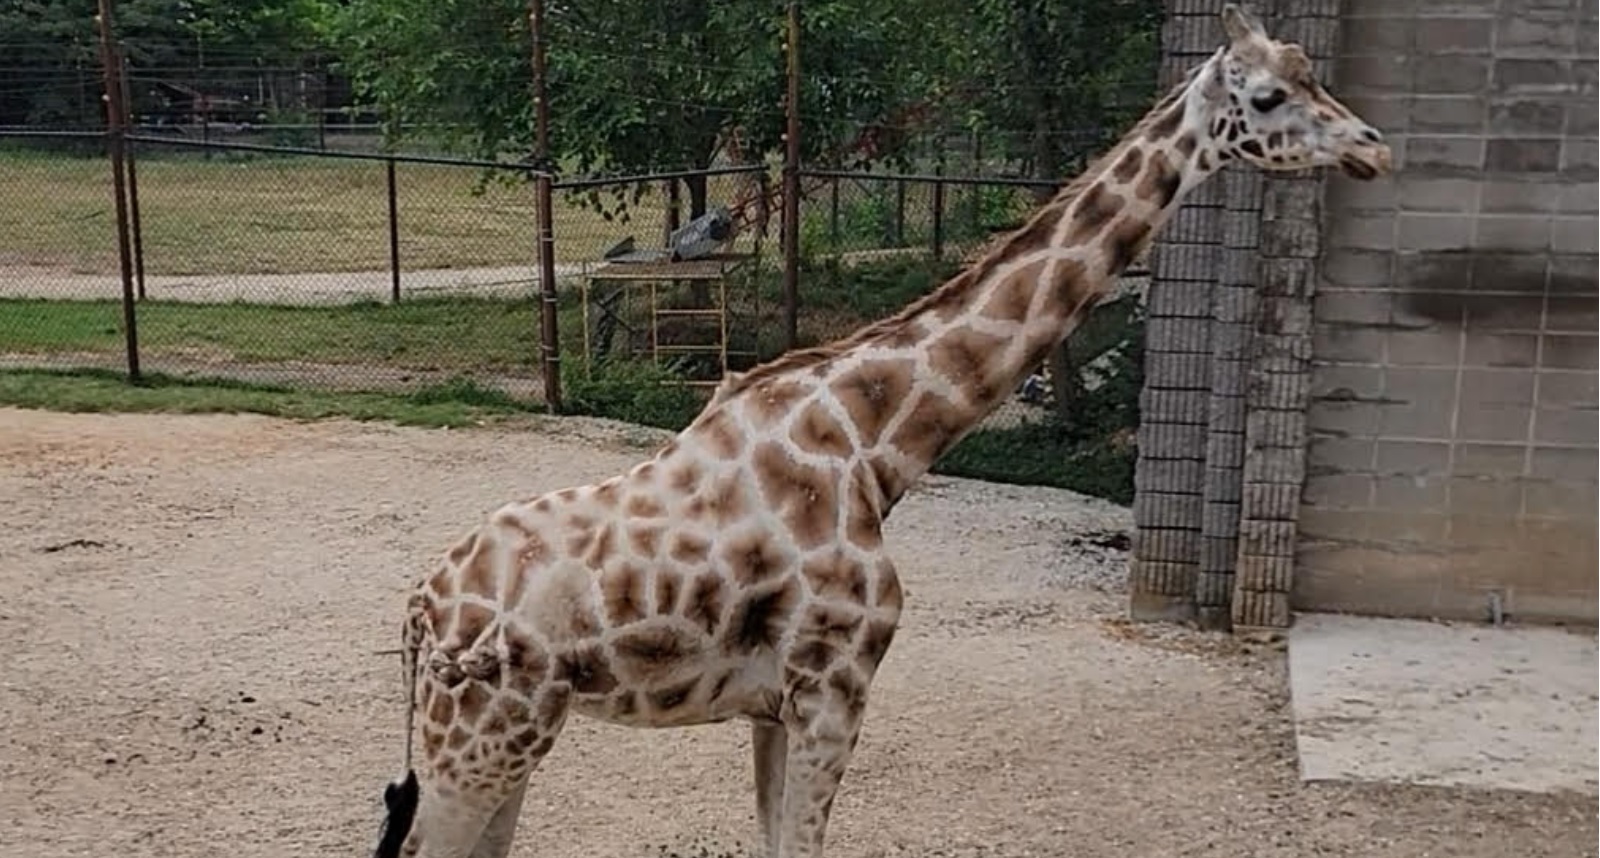 Gidget the giraffe at the Dickerson Park Zoo in Springfield, Missouri.